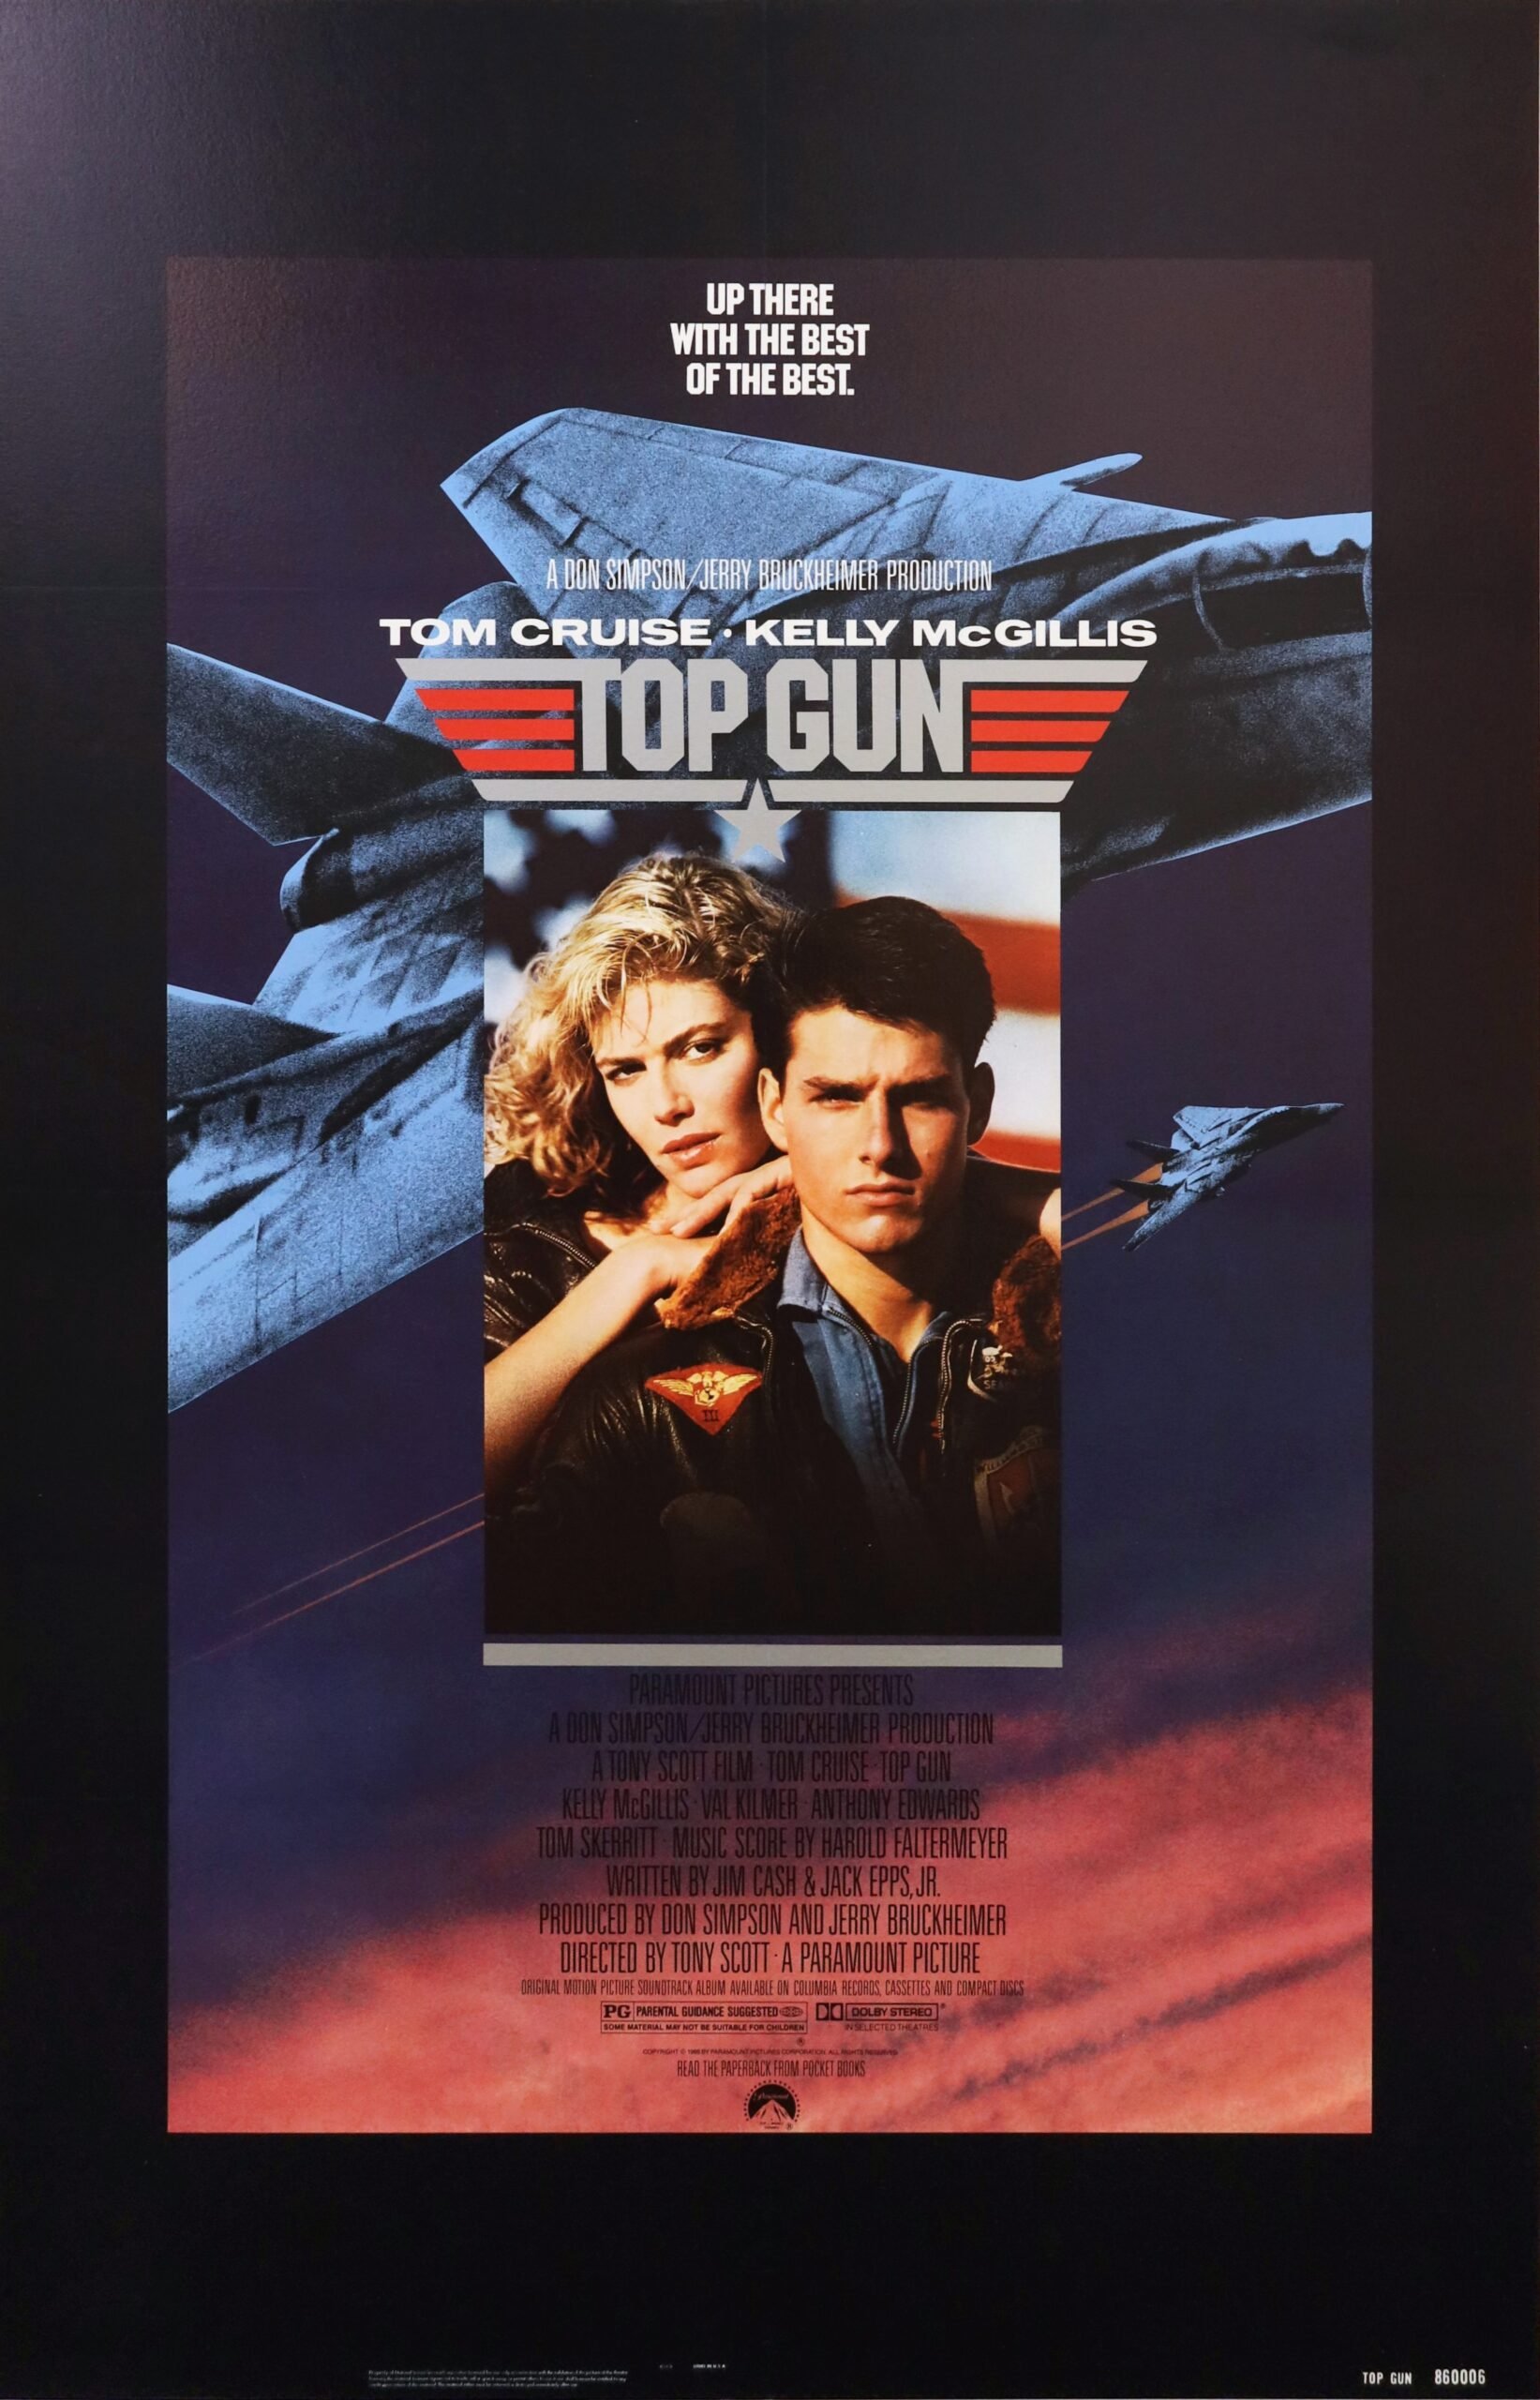 Vintage original US movie poster for Tom Cruise film Top Gun